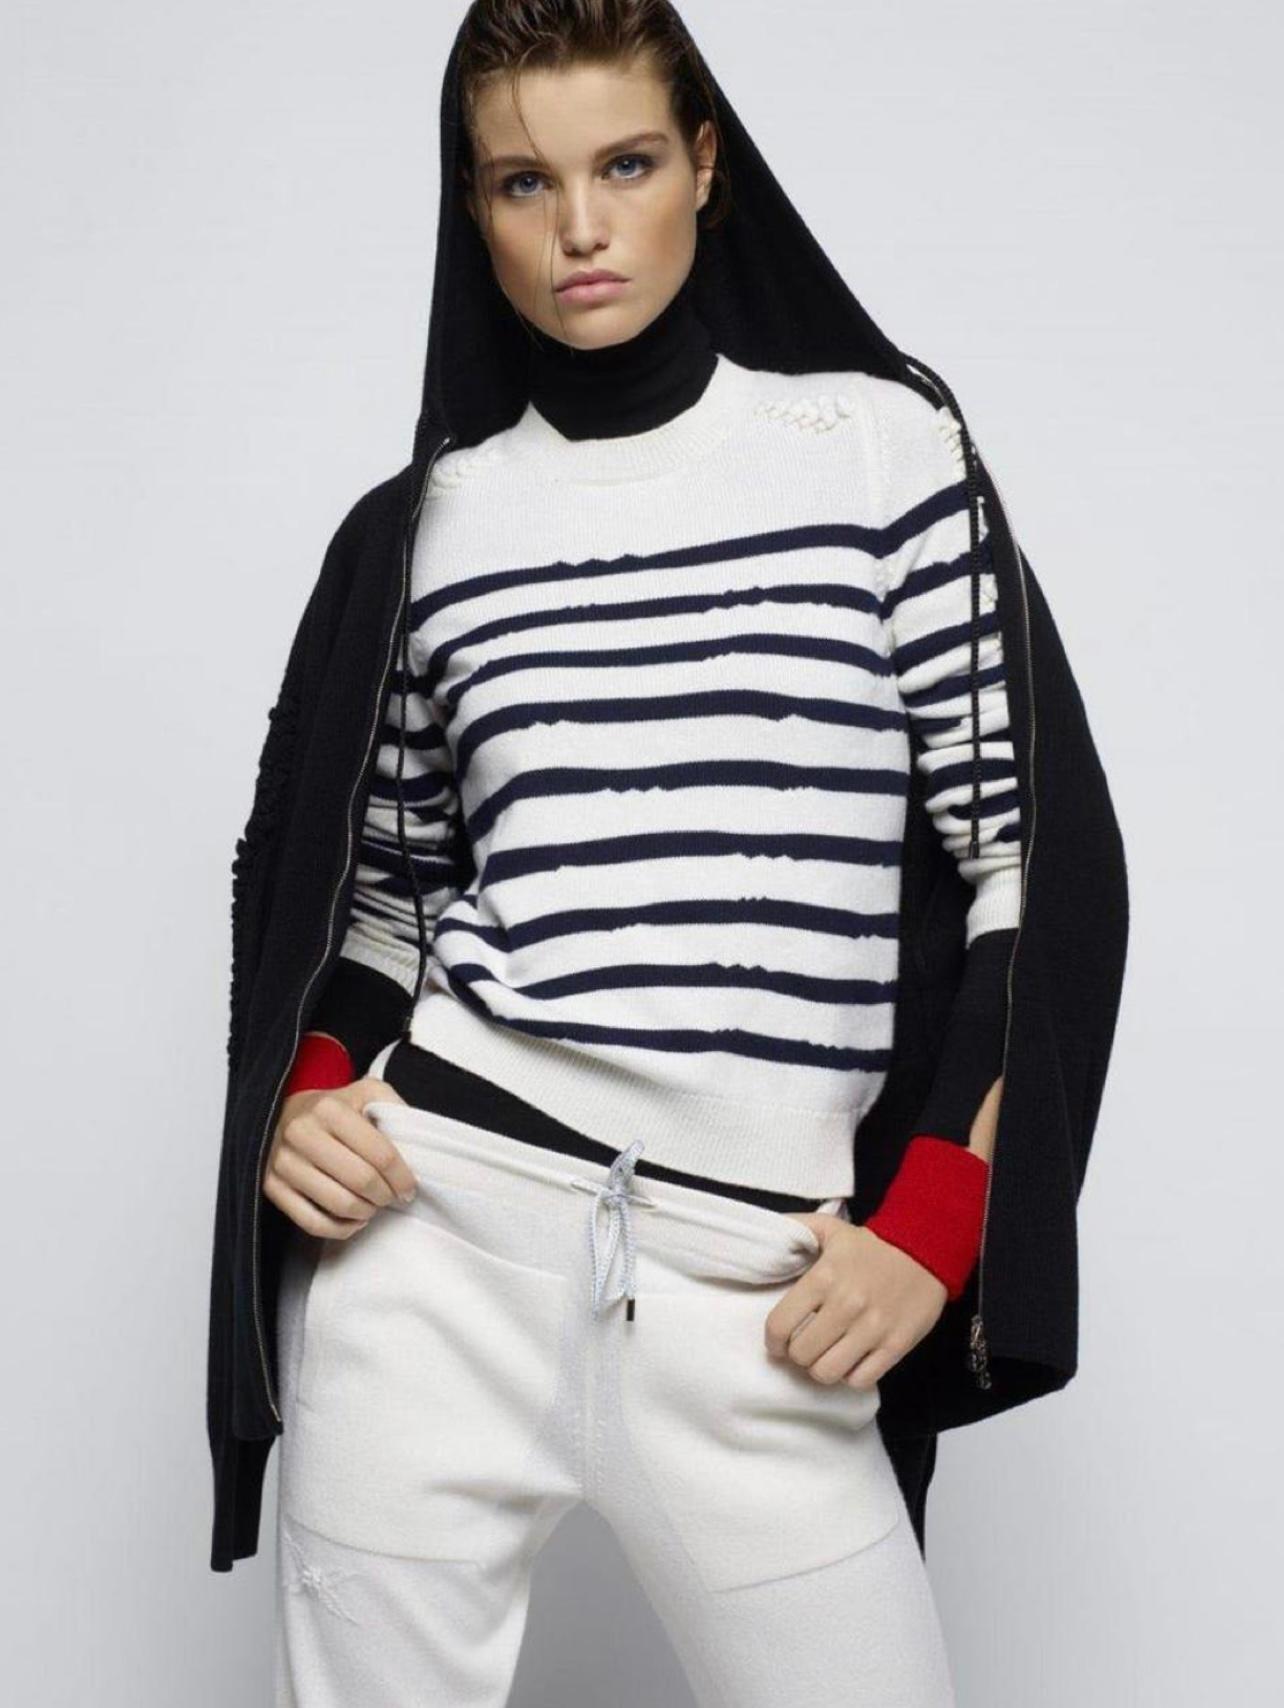 Chanel cashmere ecru / black jumper with CC logo buttons at shoulder. Condition is pristine, size mark 36 FR.